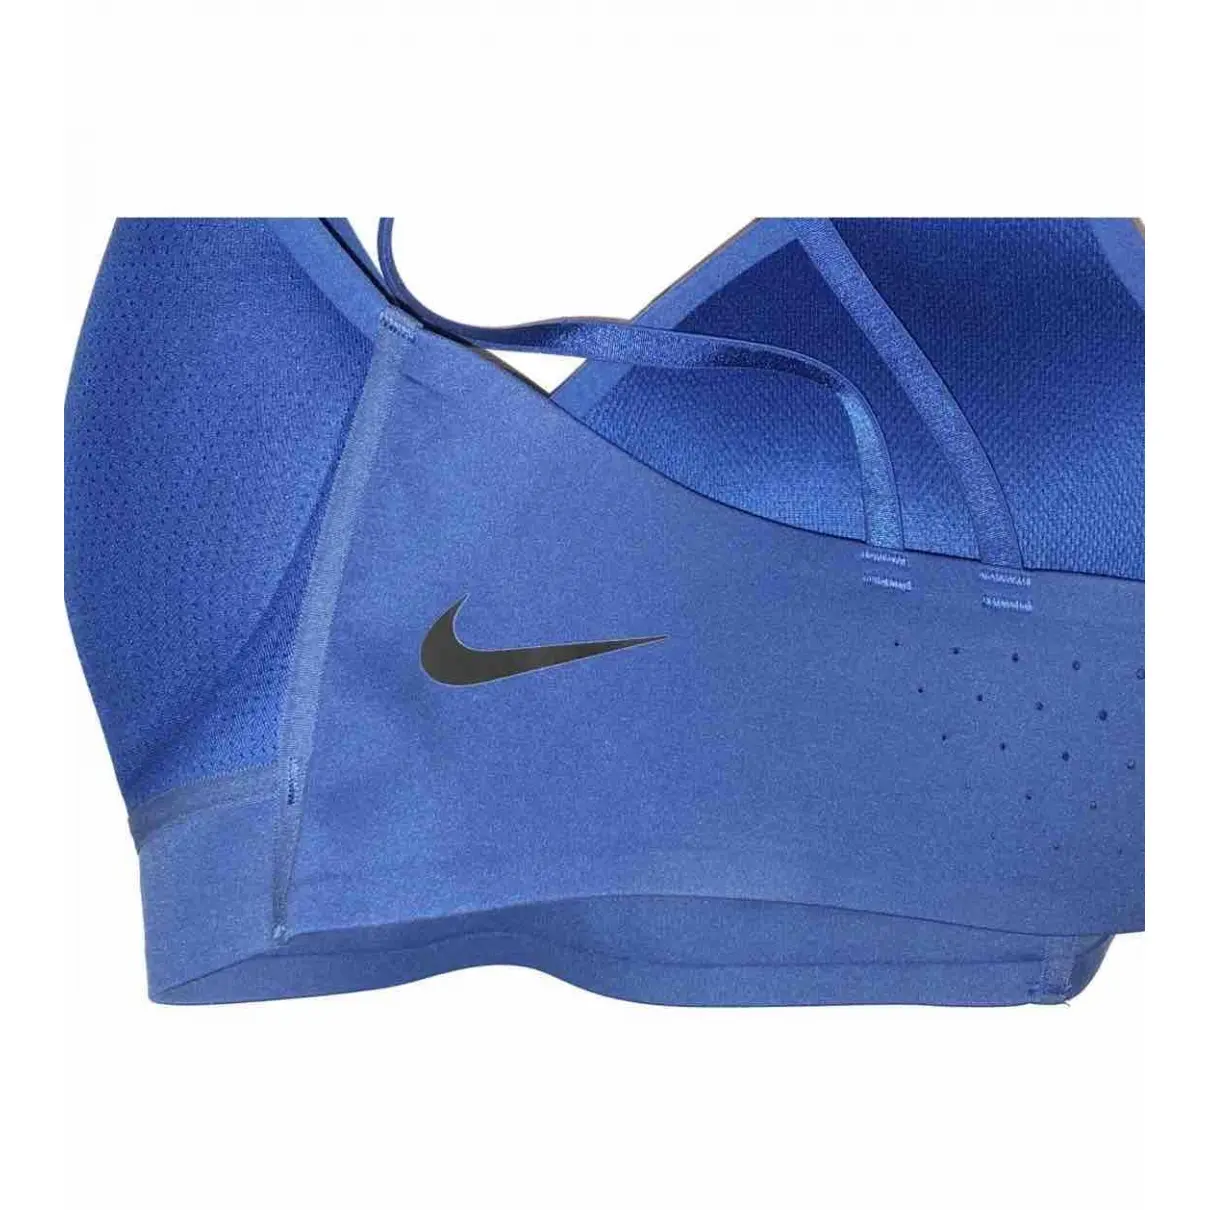 Buy Nike Camisole online